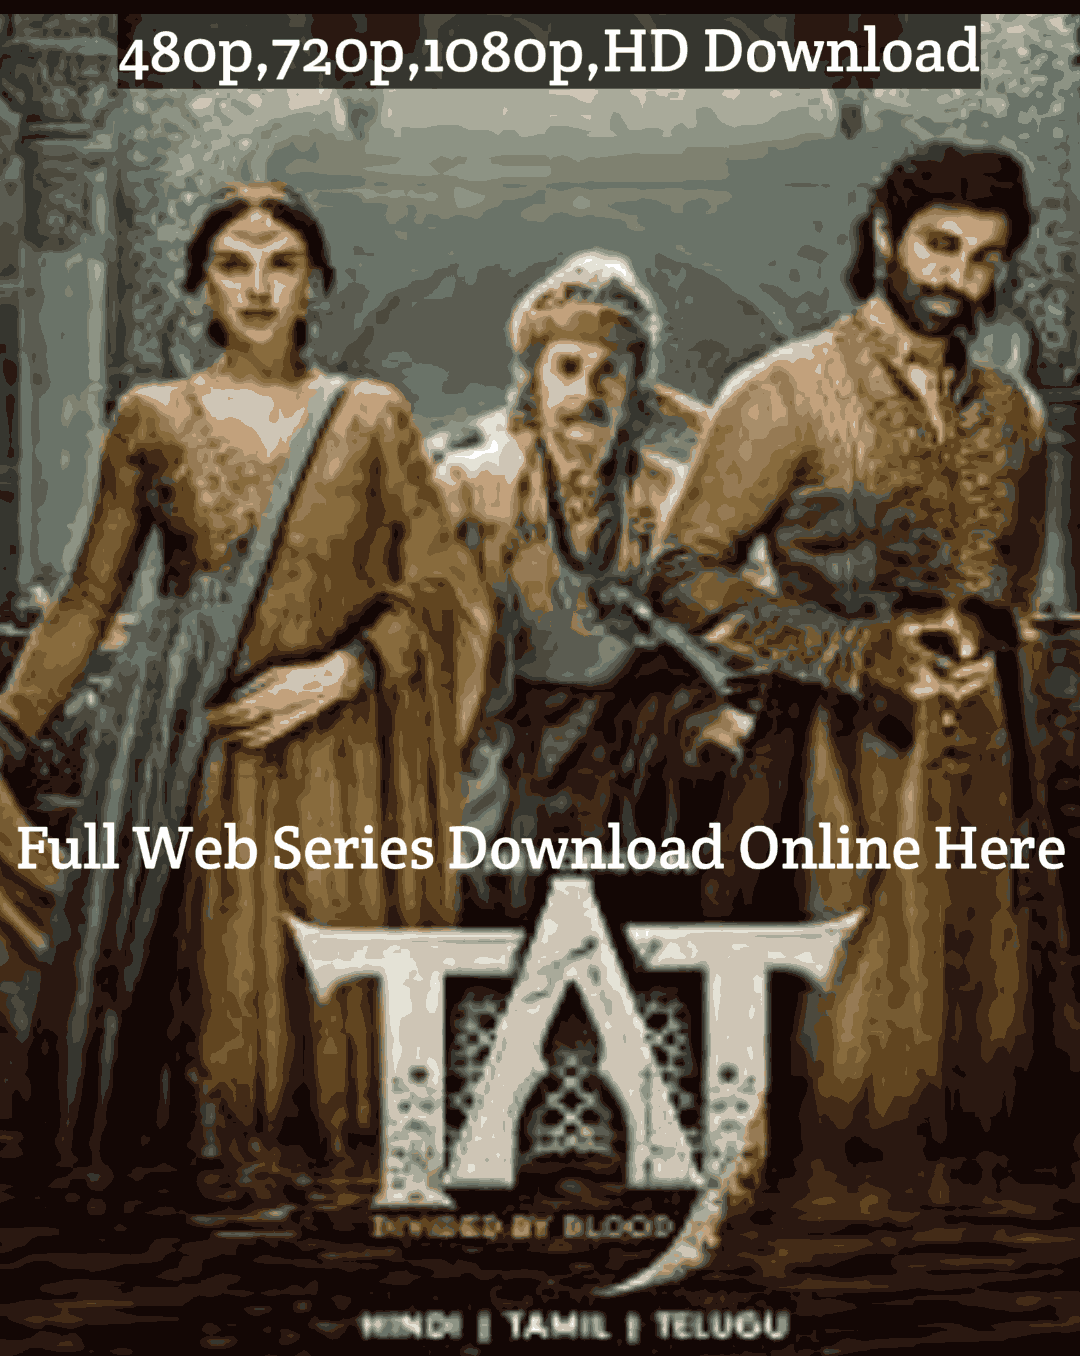 Taj Divided by Blood Hindi Web Series ZEE5 Download Leaked Free HD